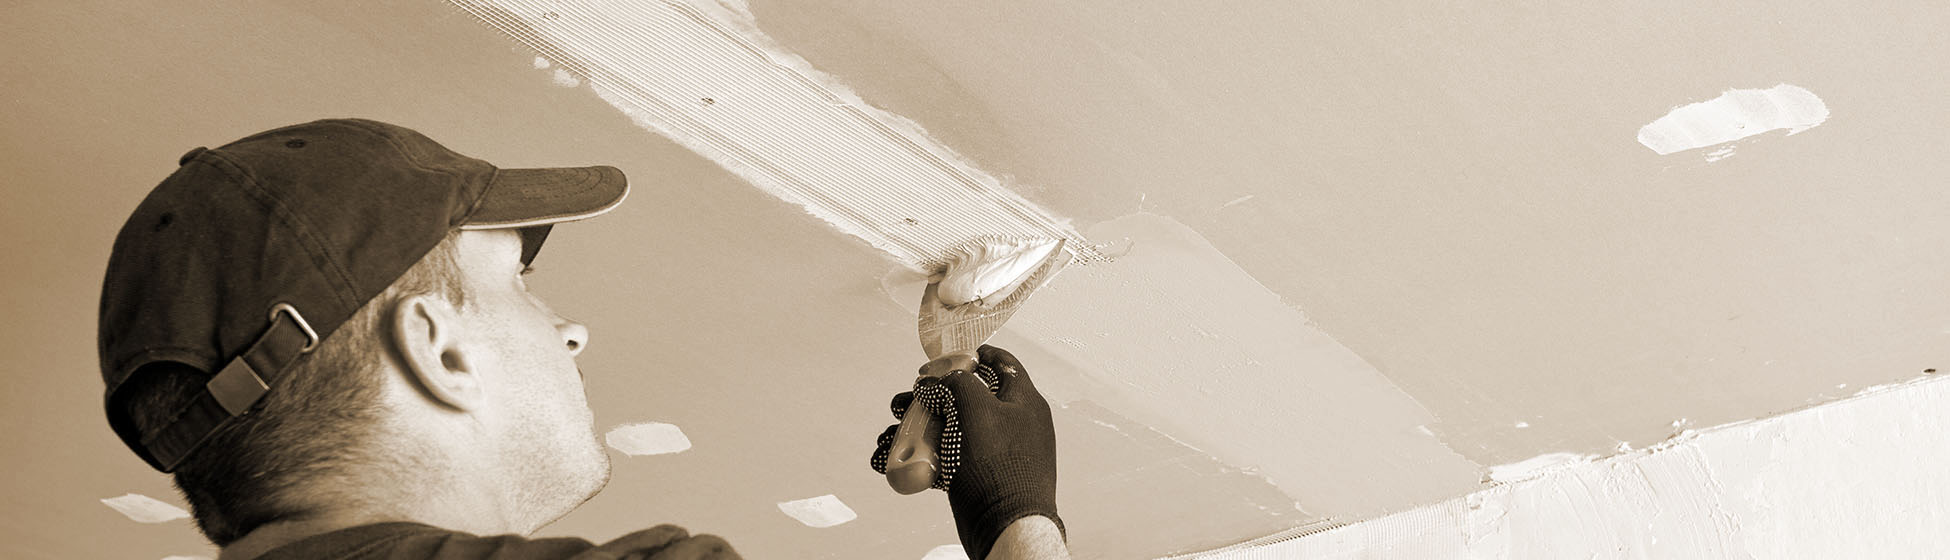 Prix pose placo plafond sans fourniture